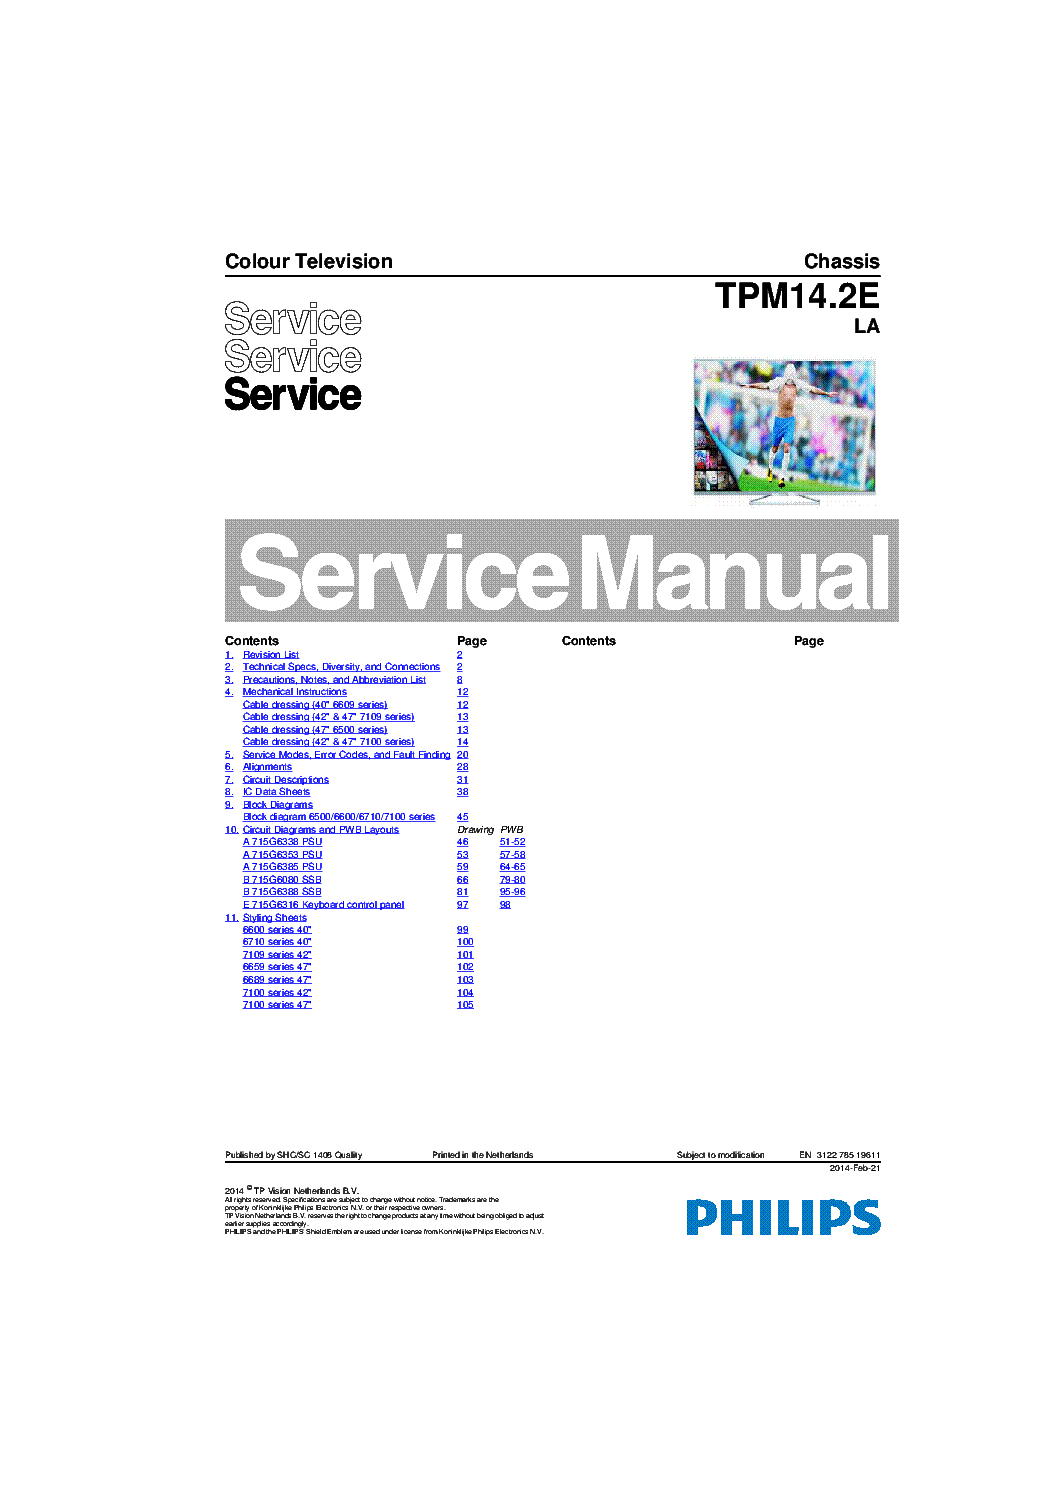 PHILIPS CHASSIS TPM14-2E-LA service manual (1st page)